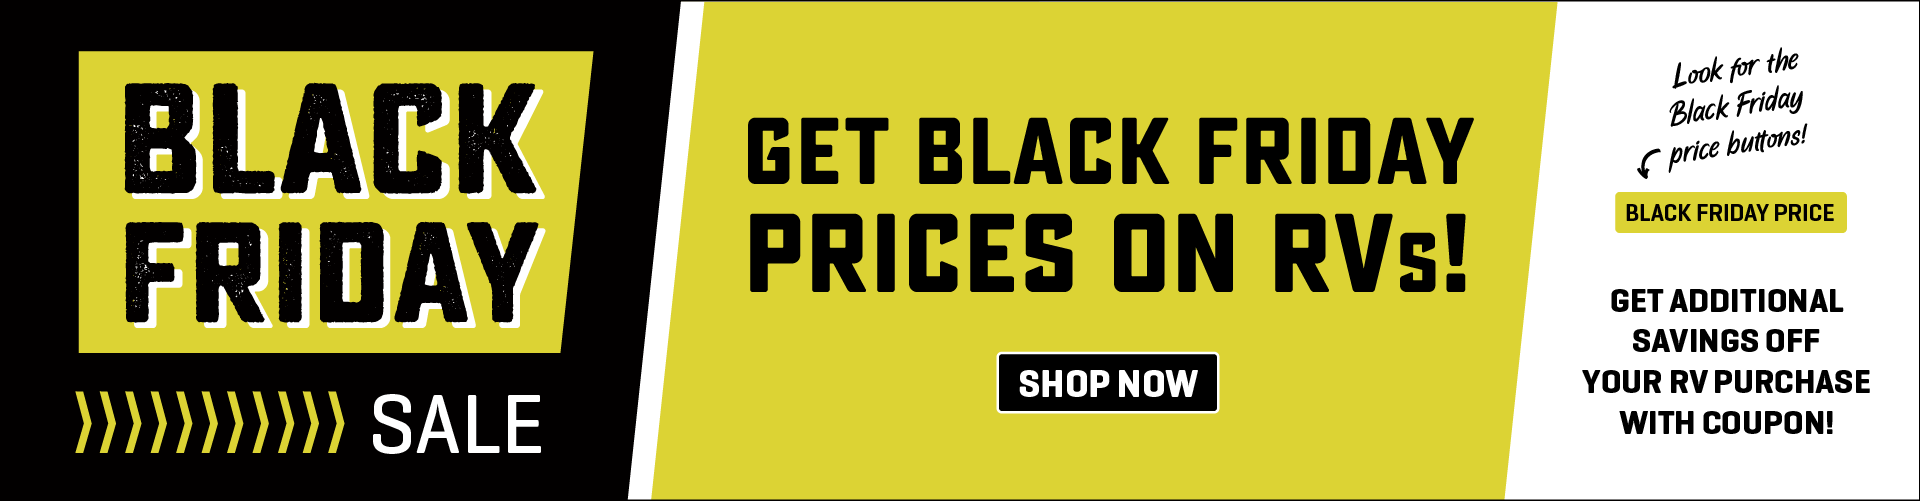 Black Friday Sale - Get Black Friday Prices On RVs